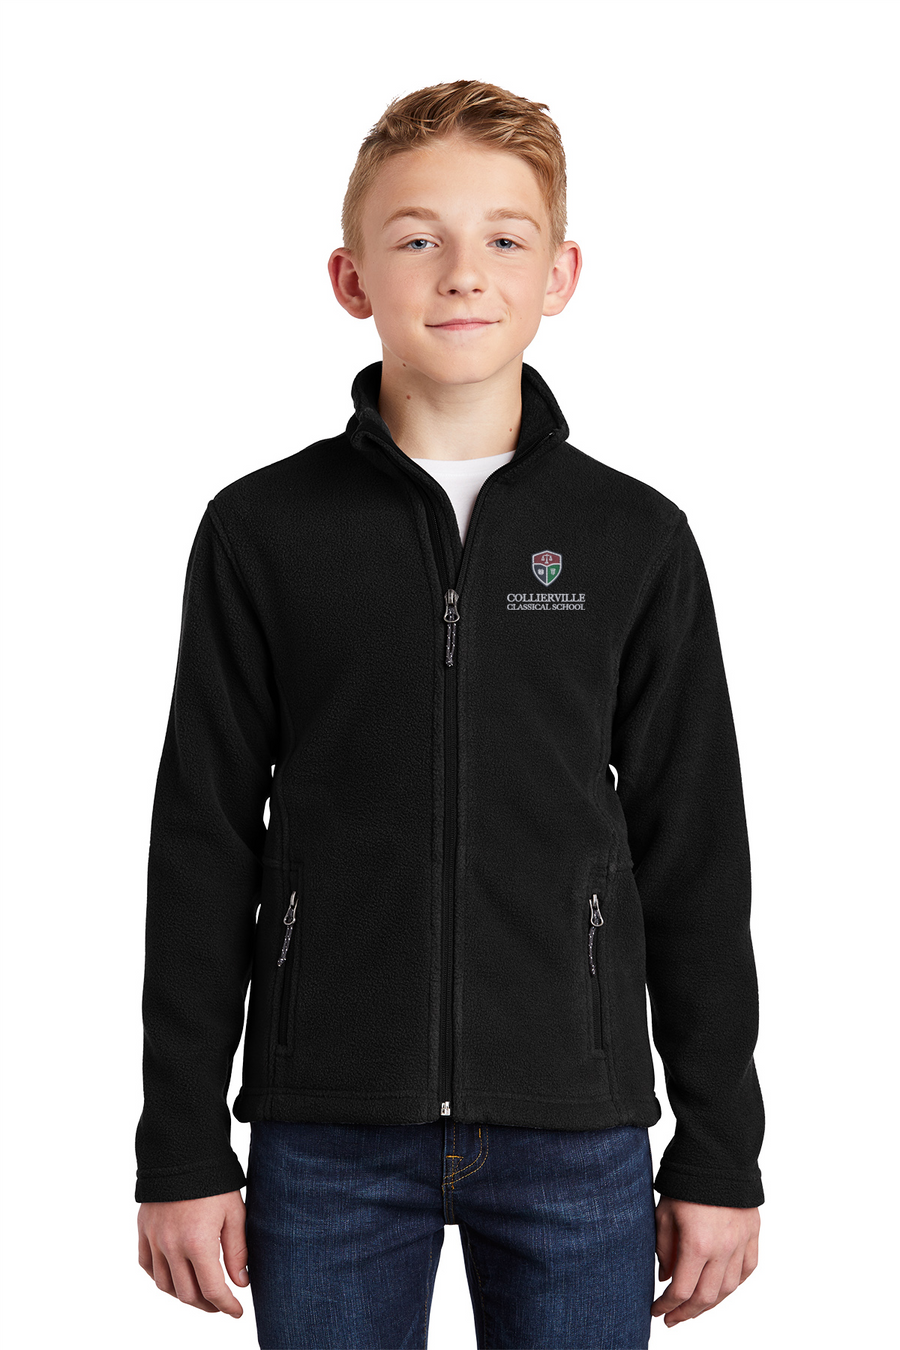 CCS - Port Authority Unisex Youth Value Fleece Jacket - Premium School Uniform from Pat's Monograms - Just $35! Shop now at Pat's Monograms